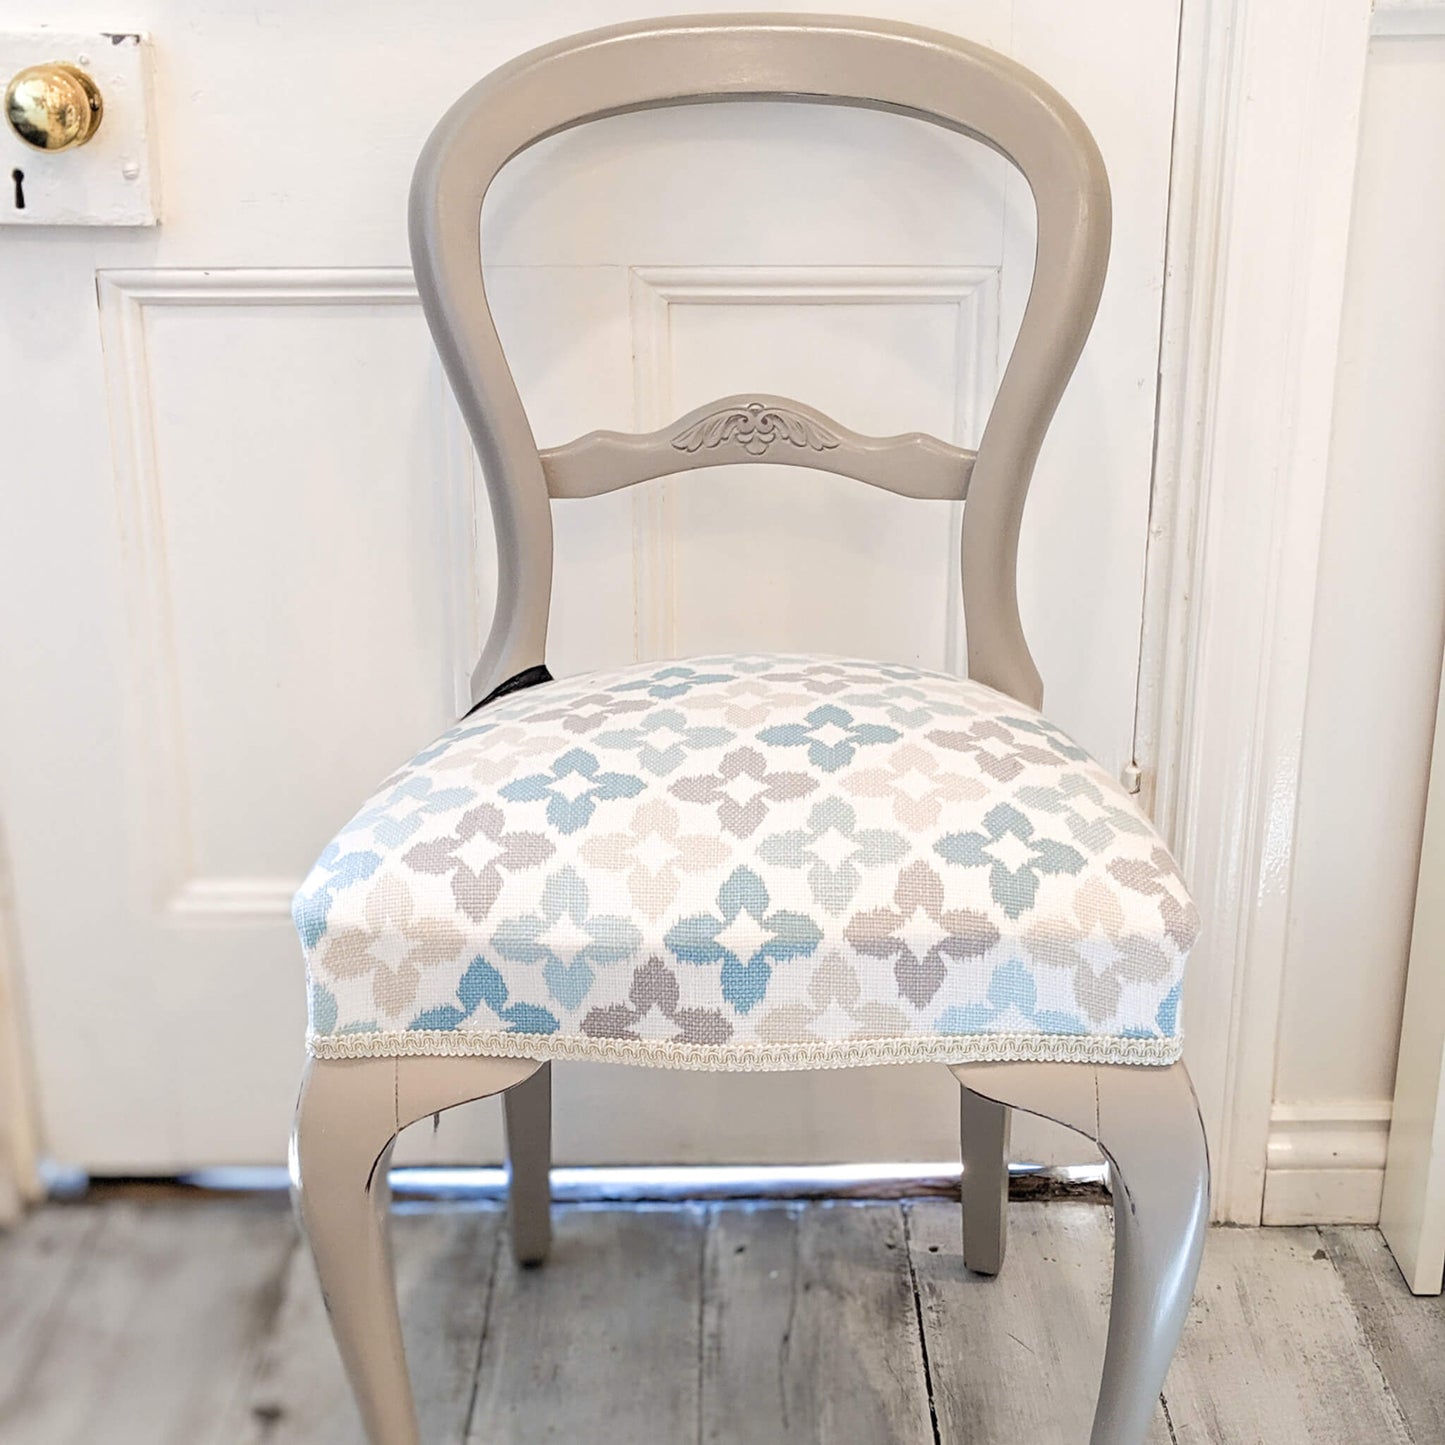 French Linen - 1 Litre - Blake & Taylor Chalk Furniture Paint